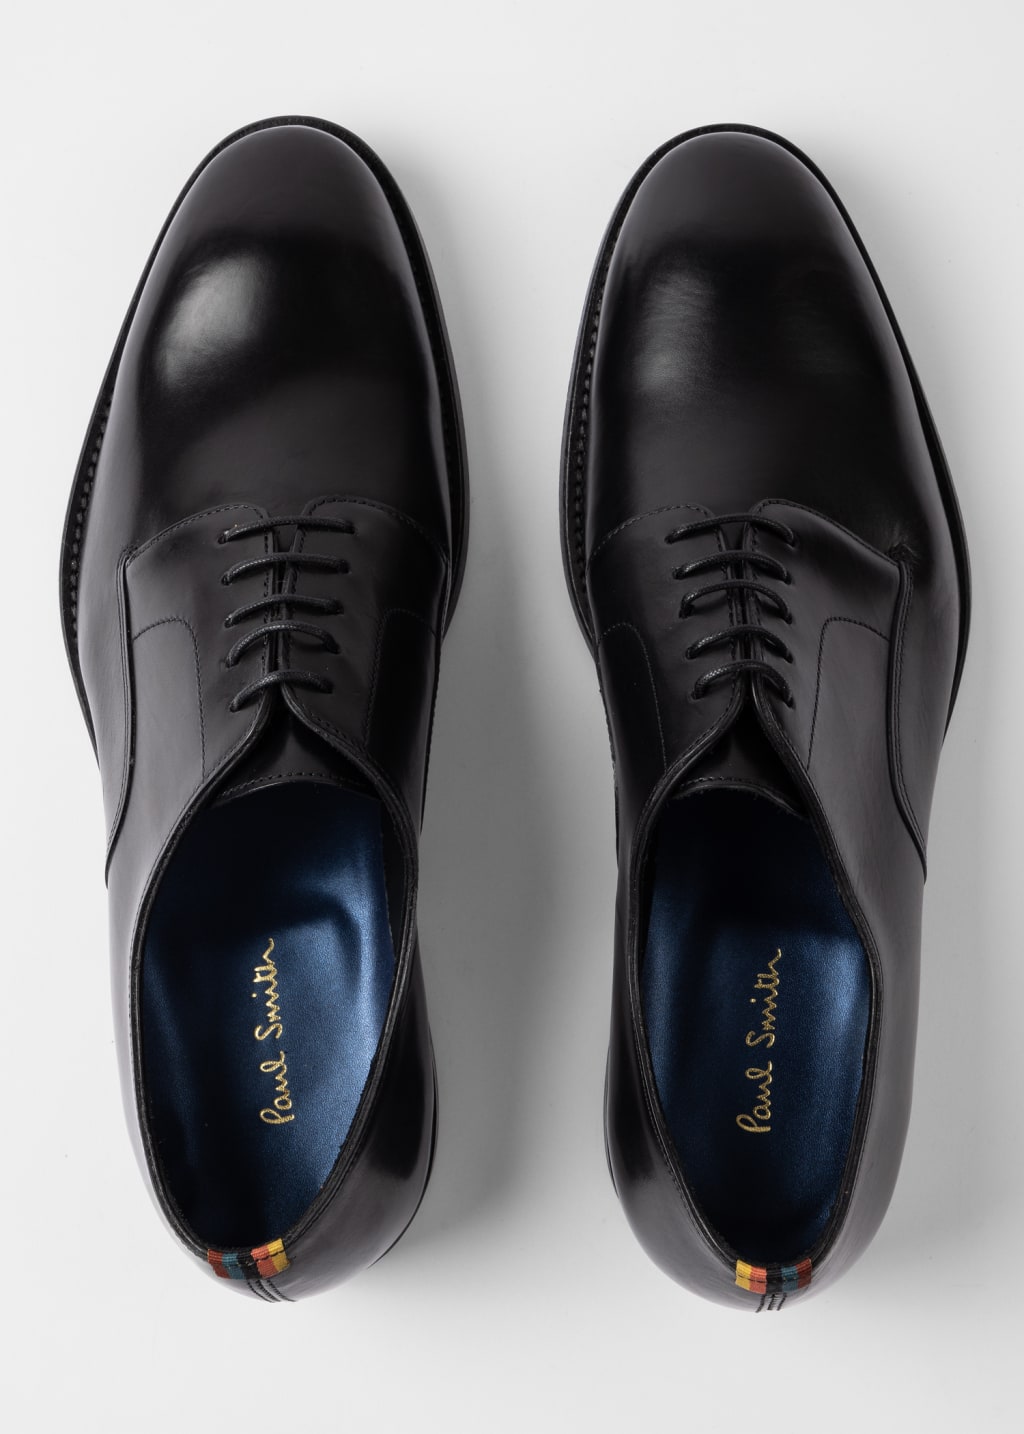 Detail View - Black Leather 'Fes' Shoes Paul Smith